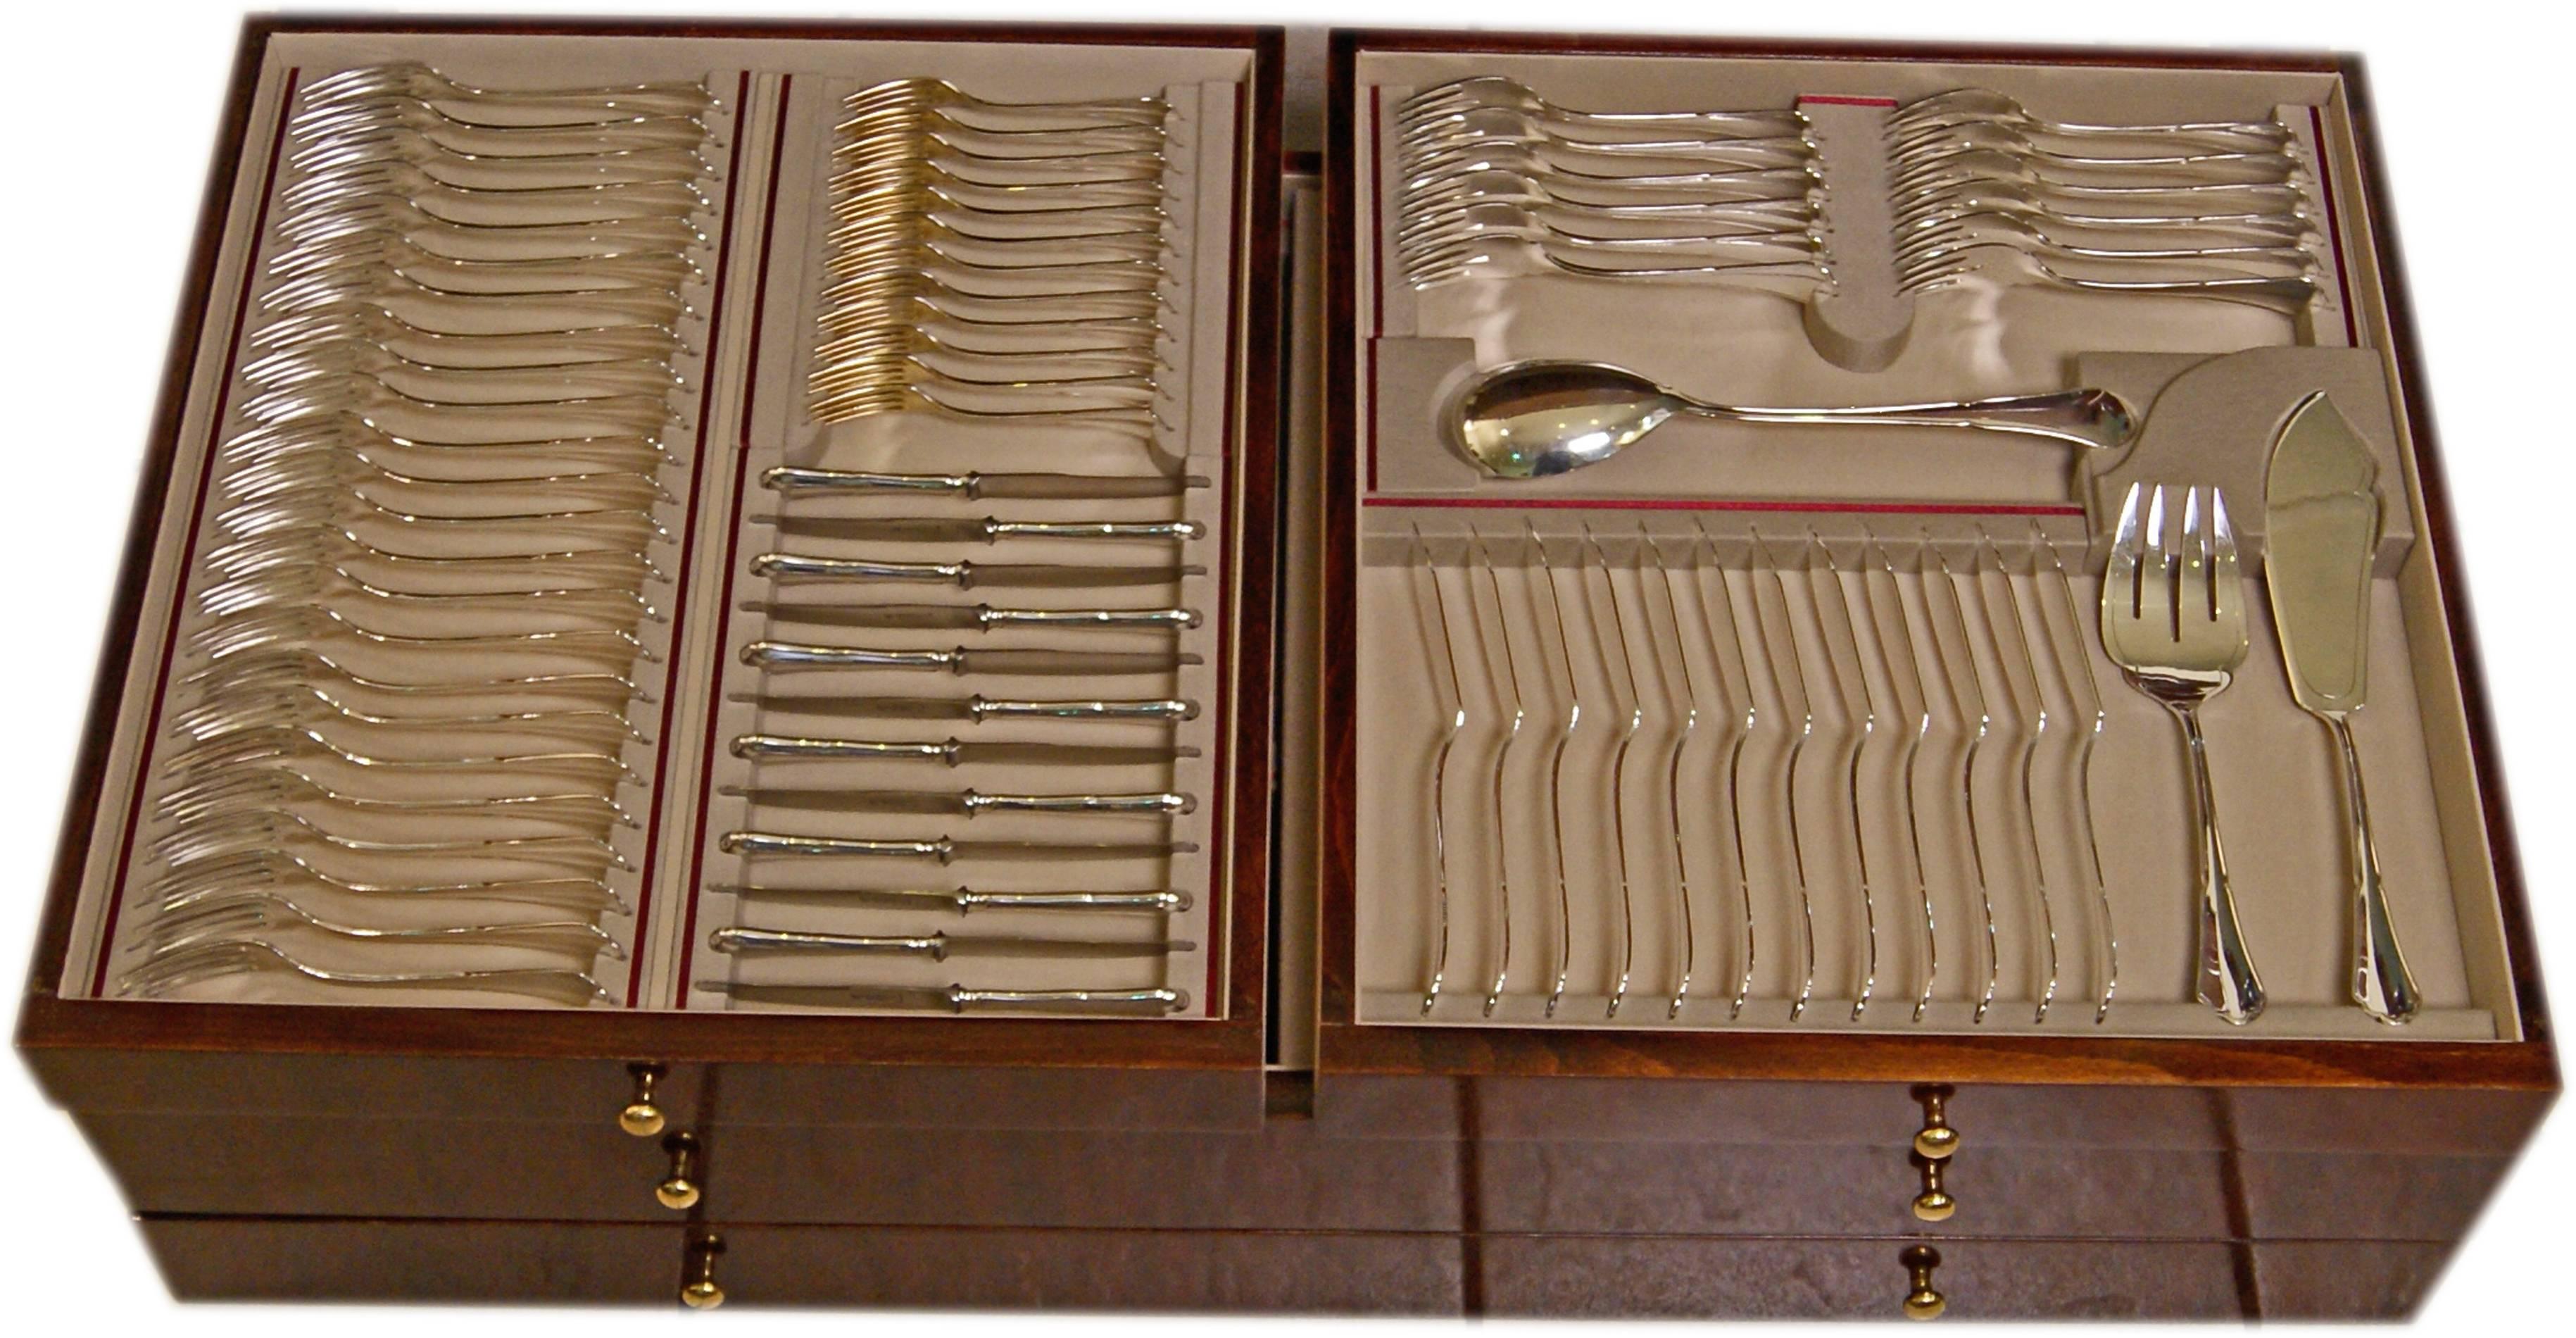 Early 20th Century Silver Flatware Cutlery 24 Persons, Bremer Silberwarenfabrik, Germany, 1910